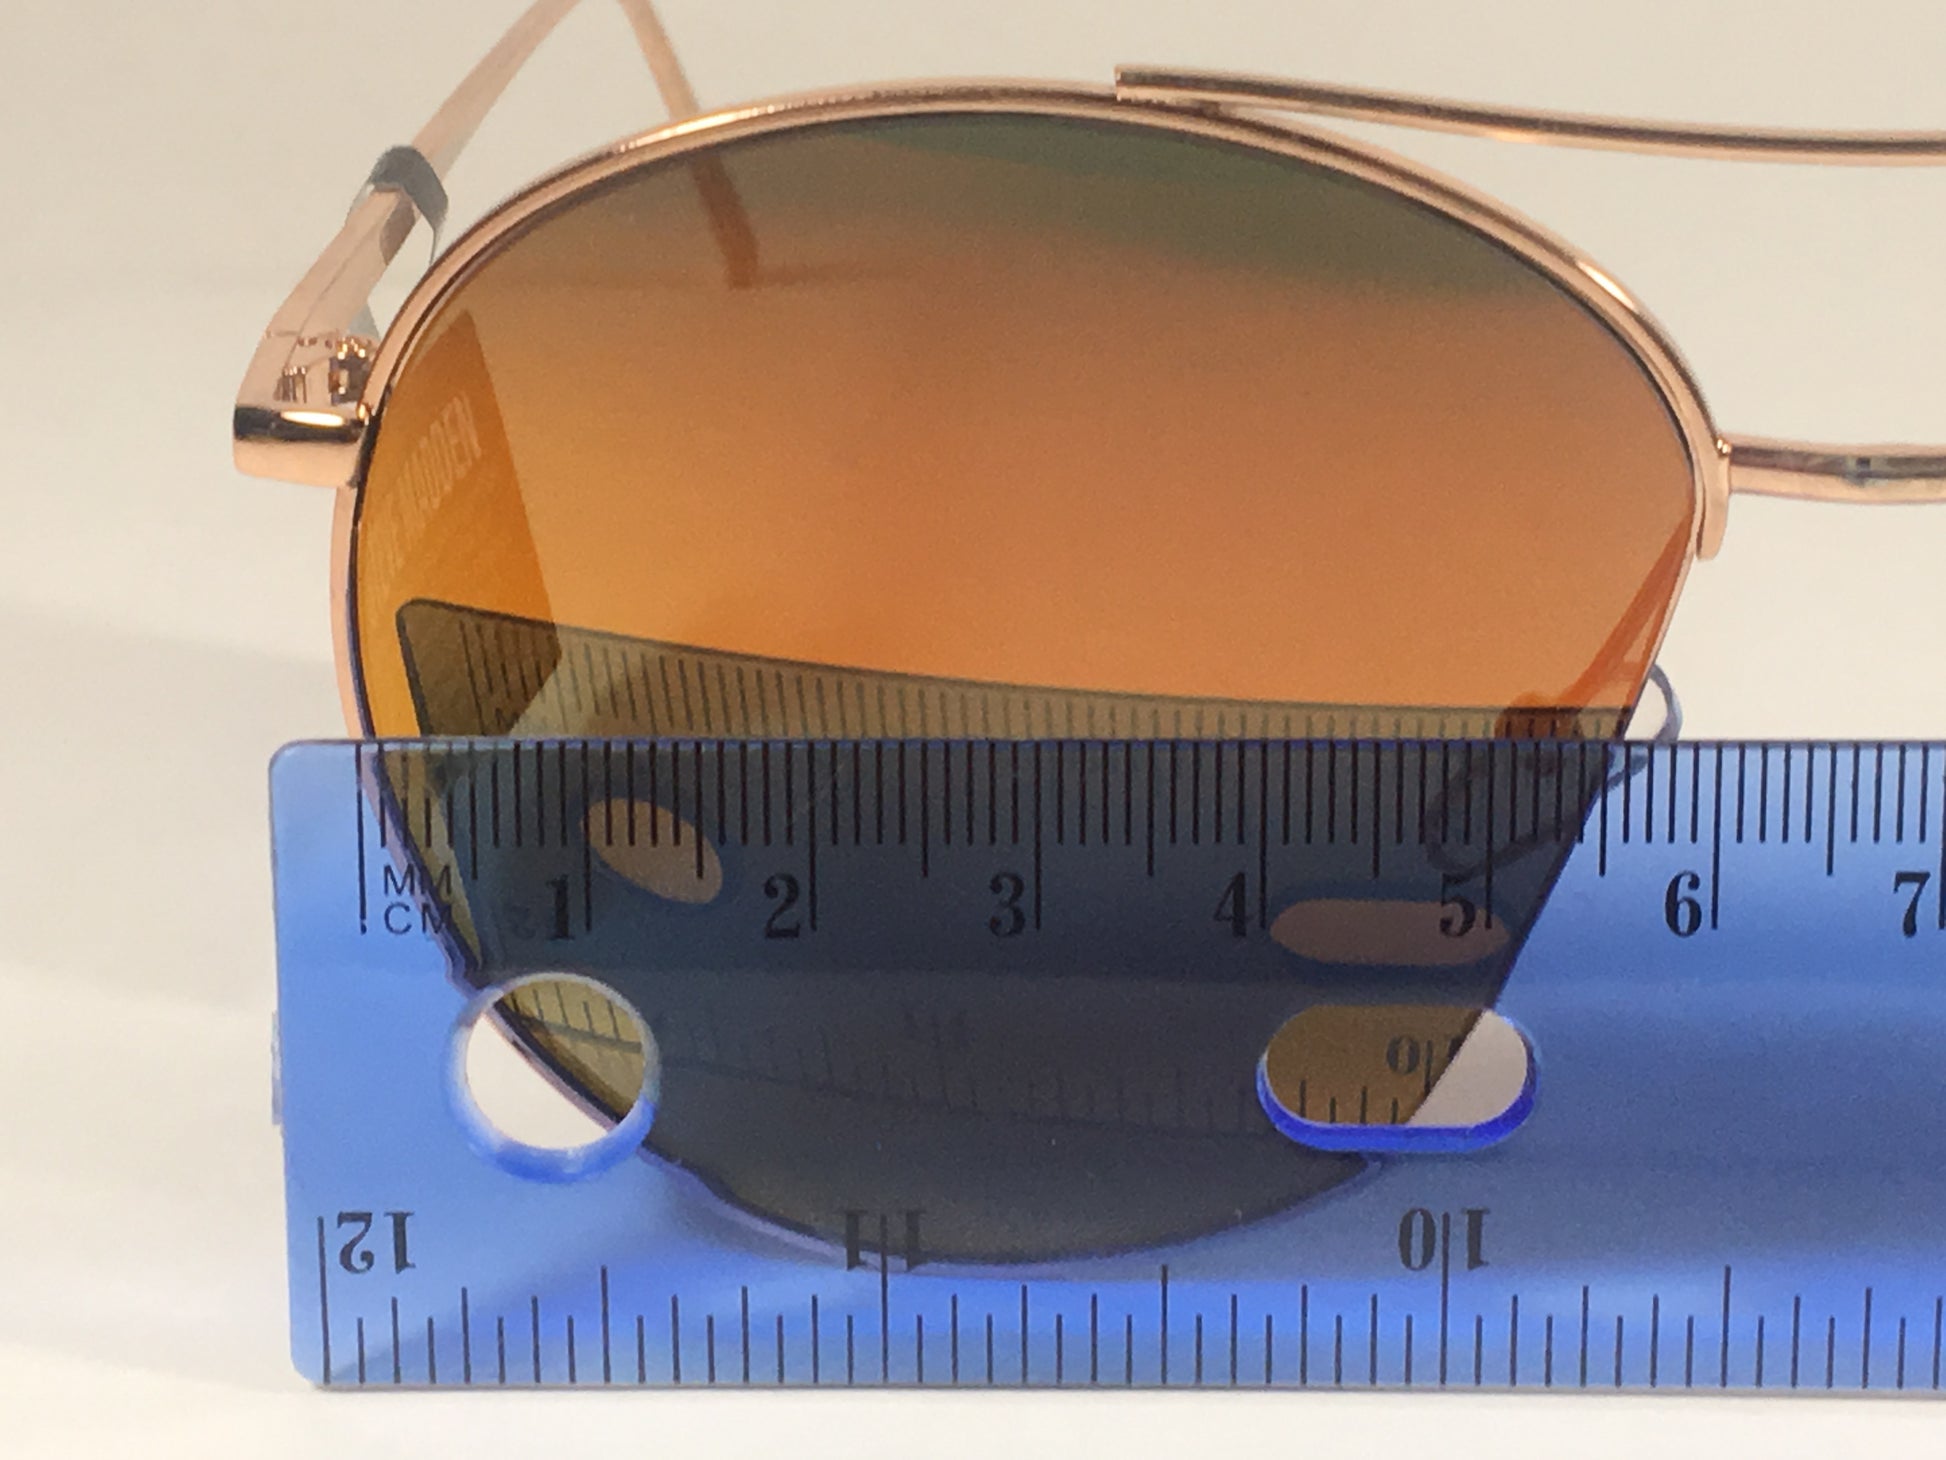 Steve Madden Aviator Pilot Sunglasses Rose Gold Orange Mirror Wedge Slice Sm482107 Rose - Sunglasses